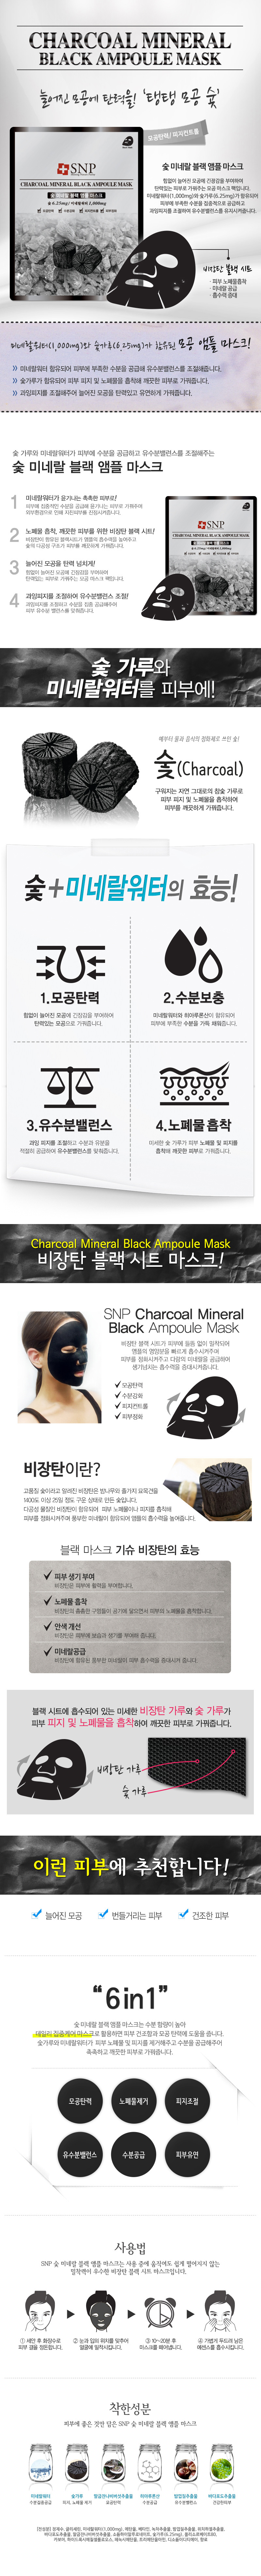 charcoal%20mineral%20mask.jpg